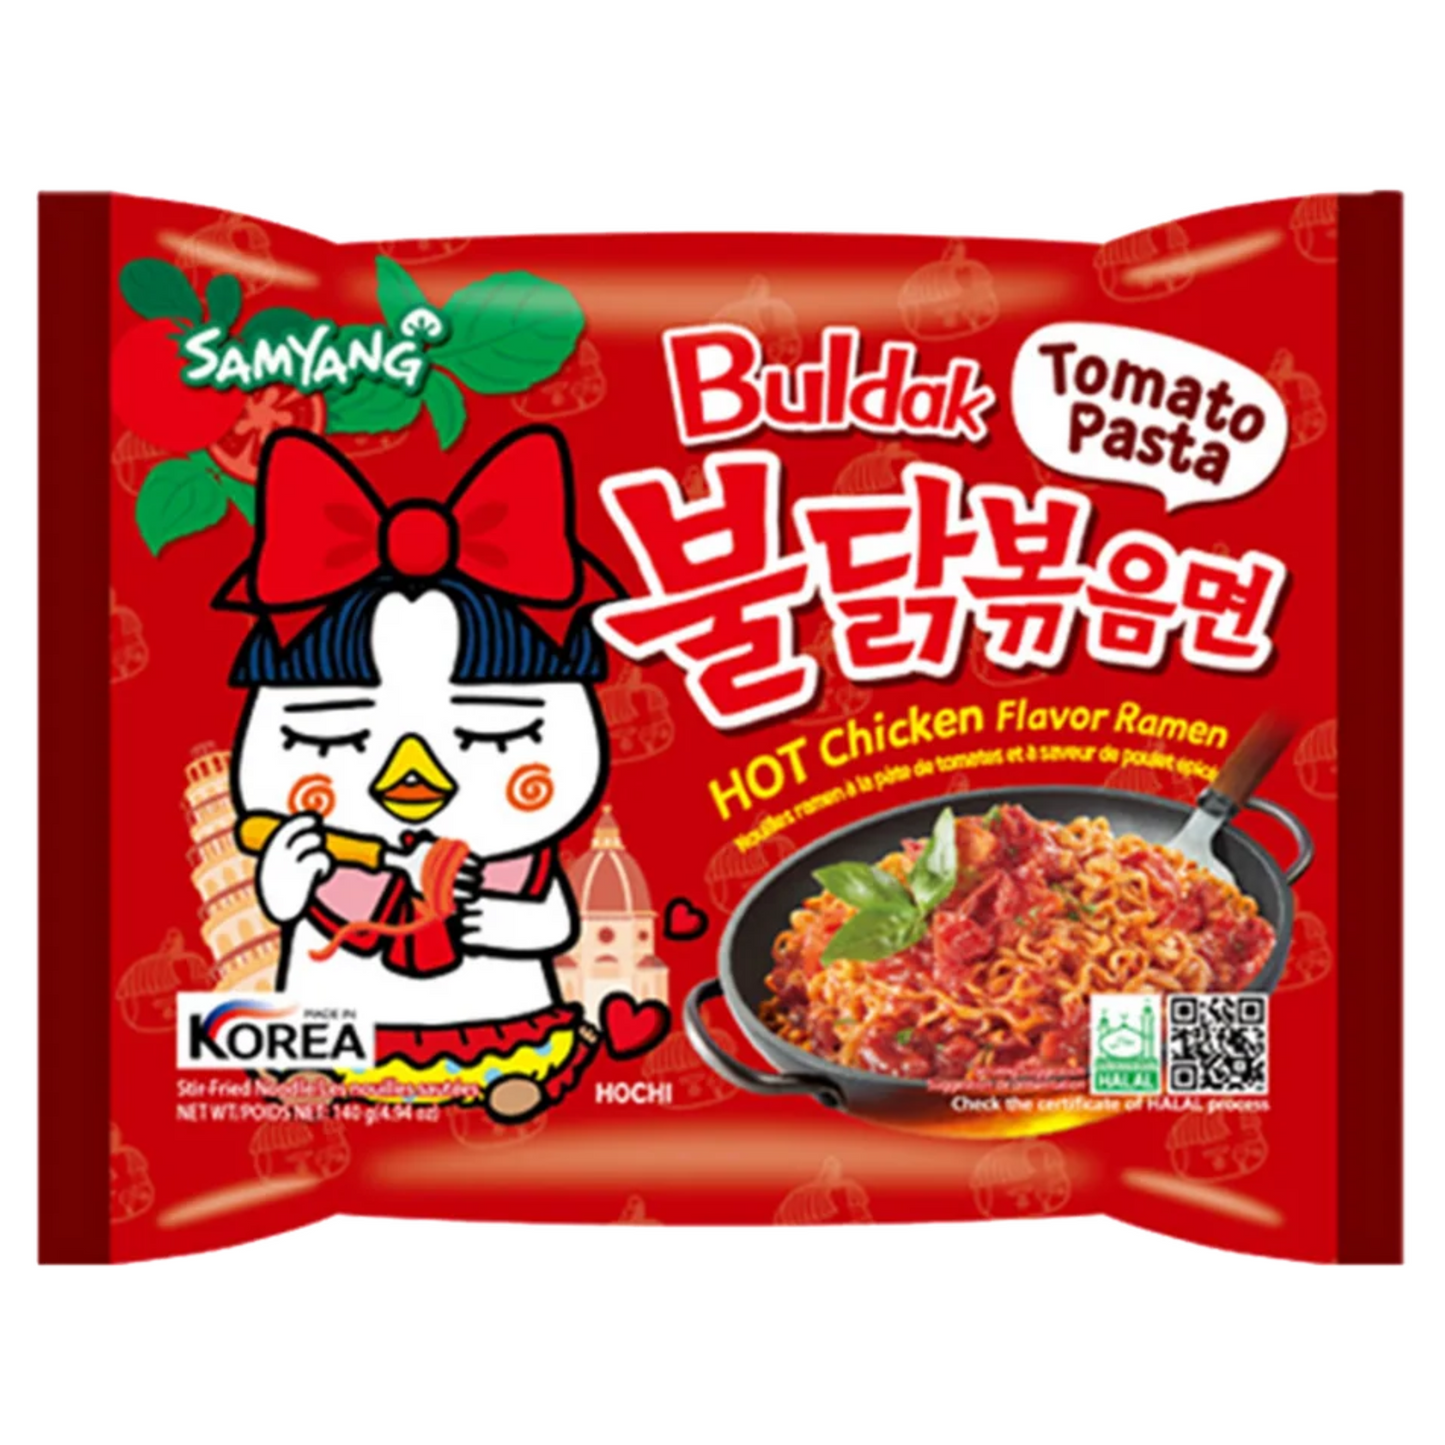 Samyang Tomato Pasta Buldak Hot Chicken Ramen Box